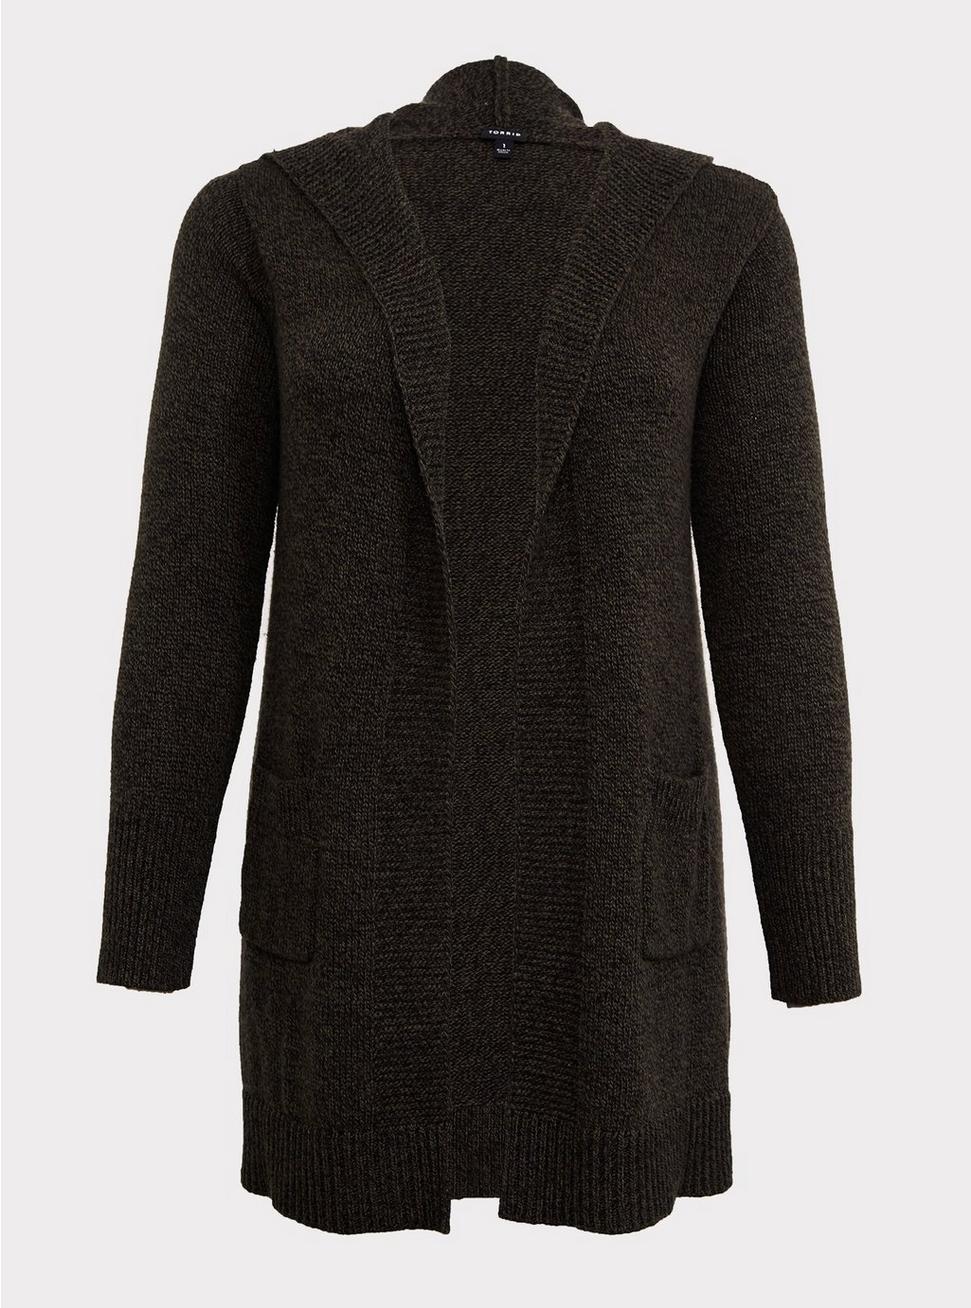 Plus Size - Olive Green Marled Woolen Hooded Cardigan Coat - Torrid